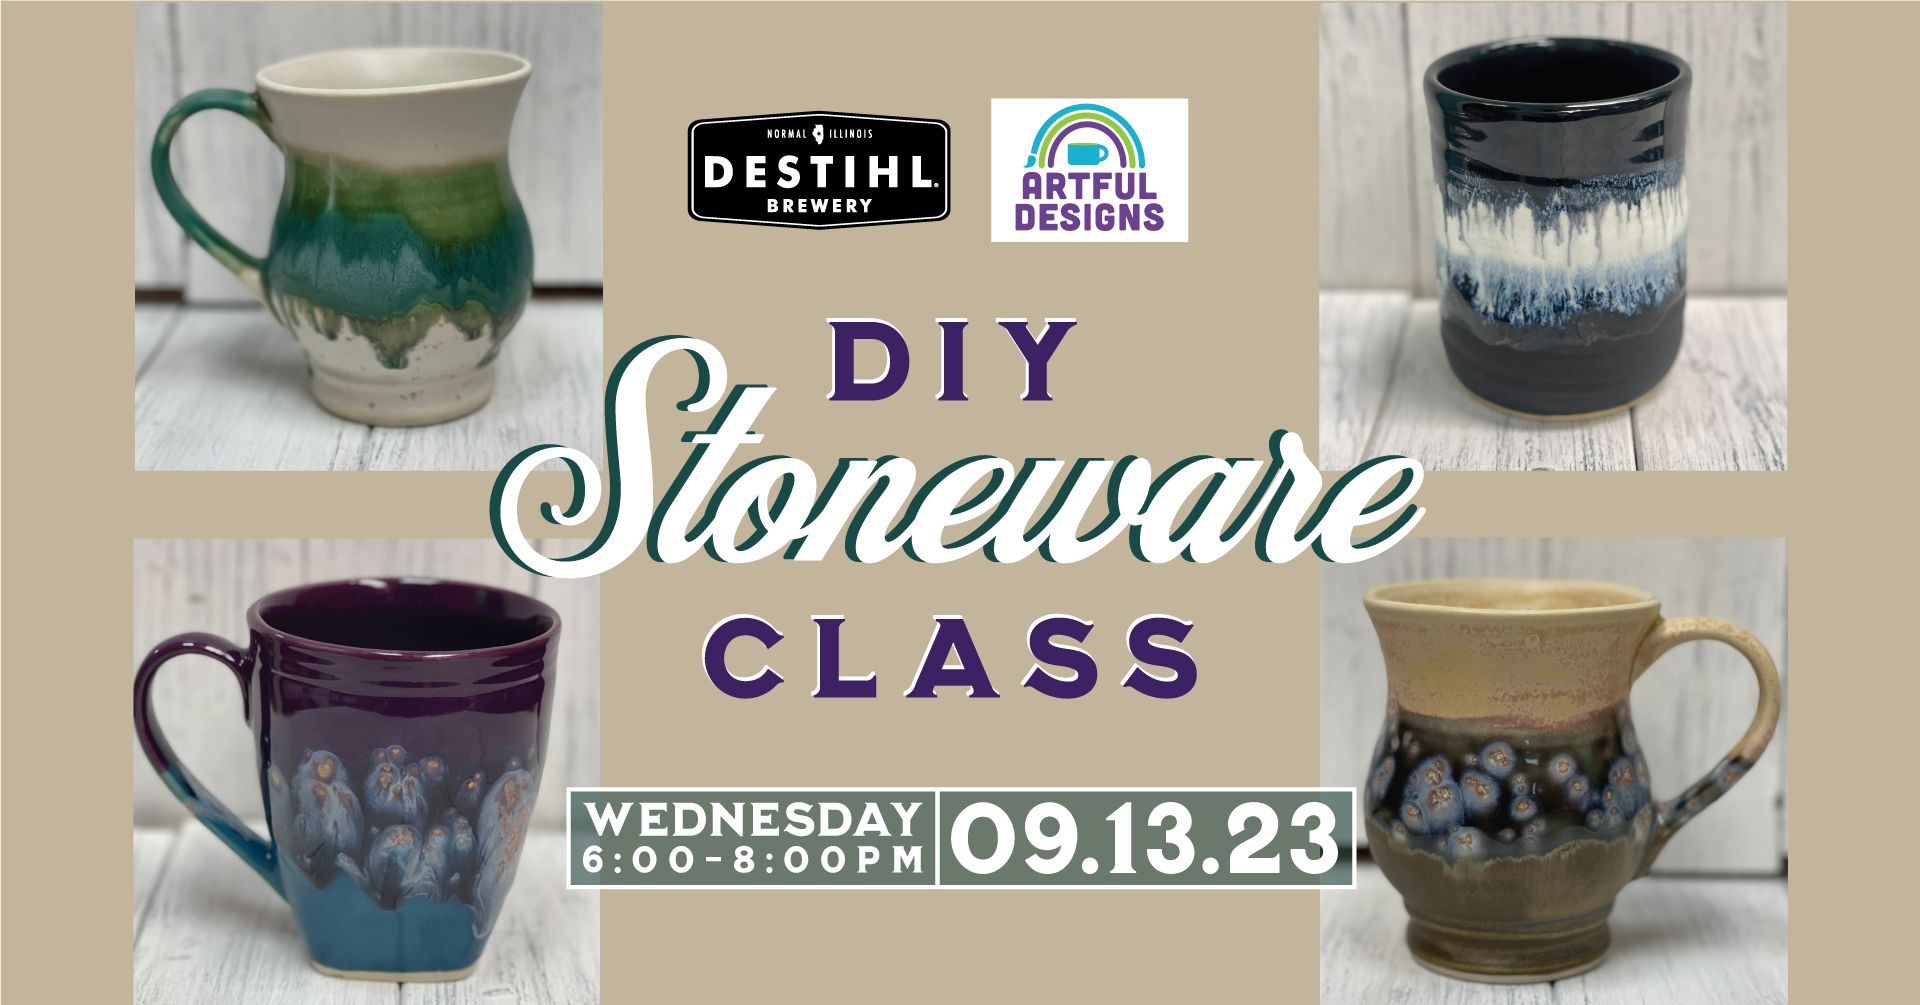 DIY Stoneware Class with Artful Designs